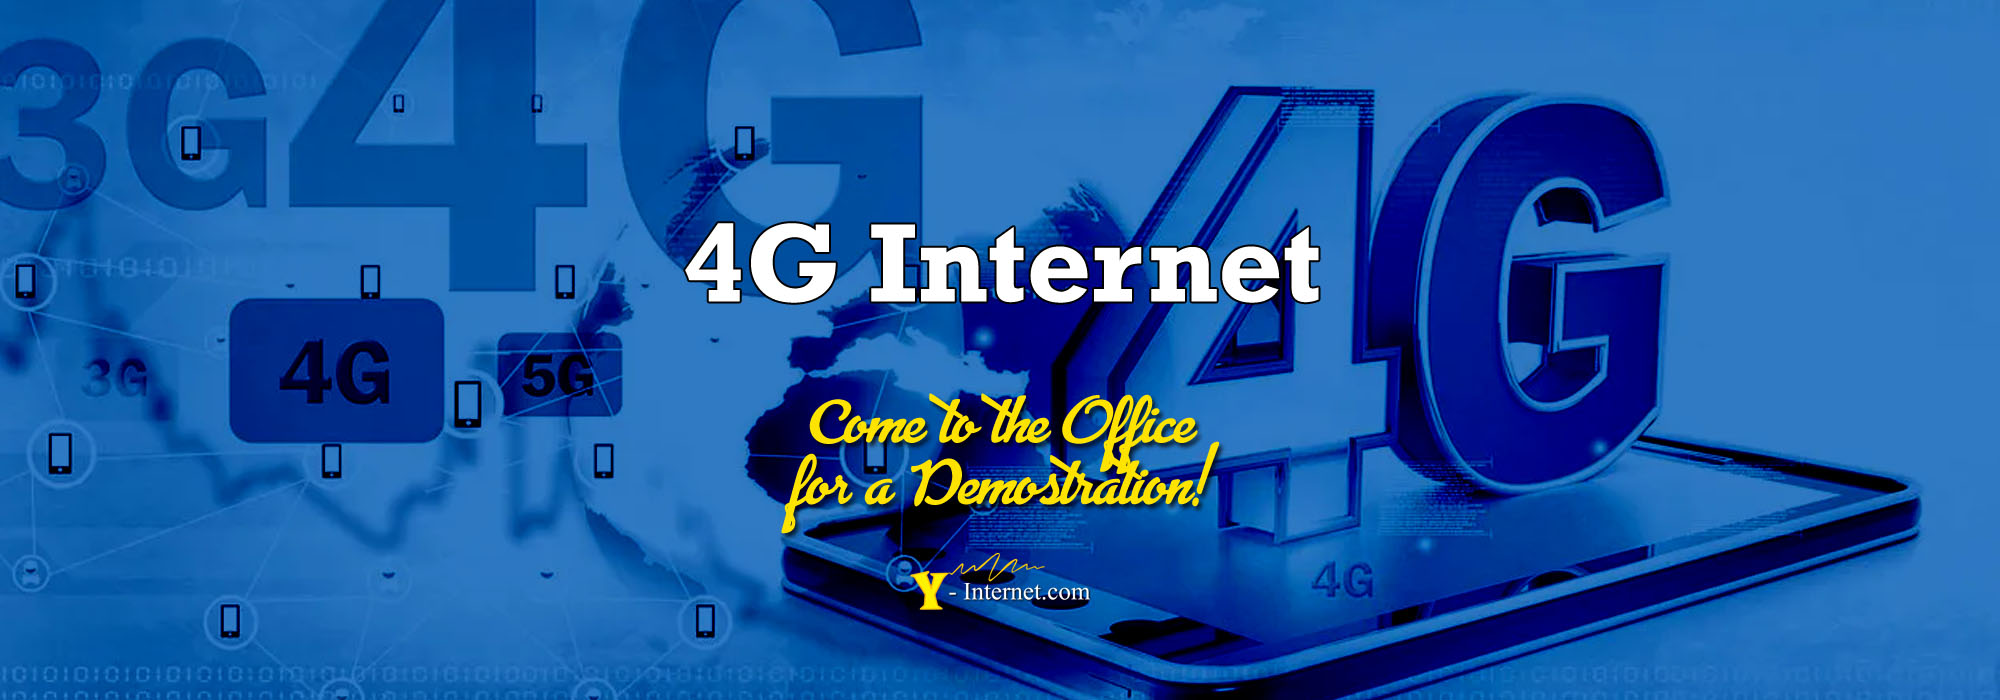 4G Internet Services - Y-Internet, Sitio de Calahonda, Spain H01